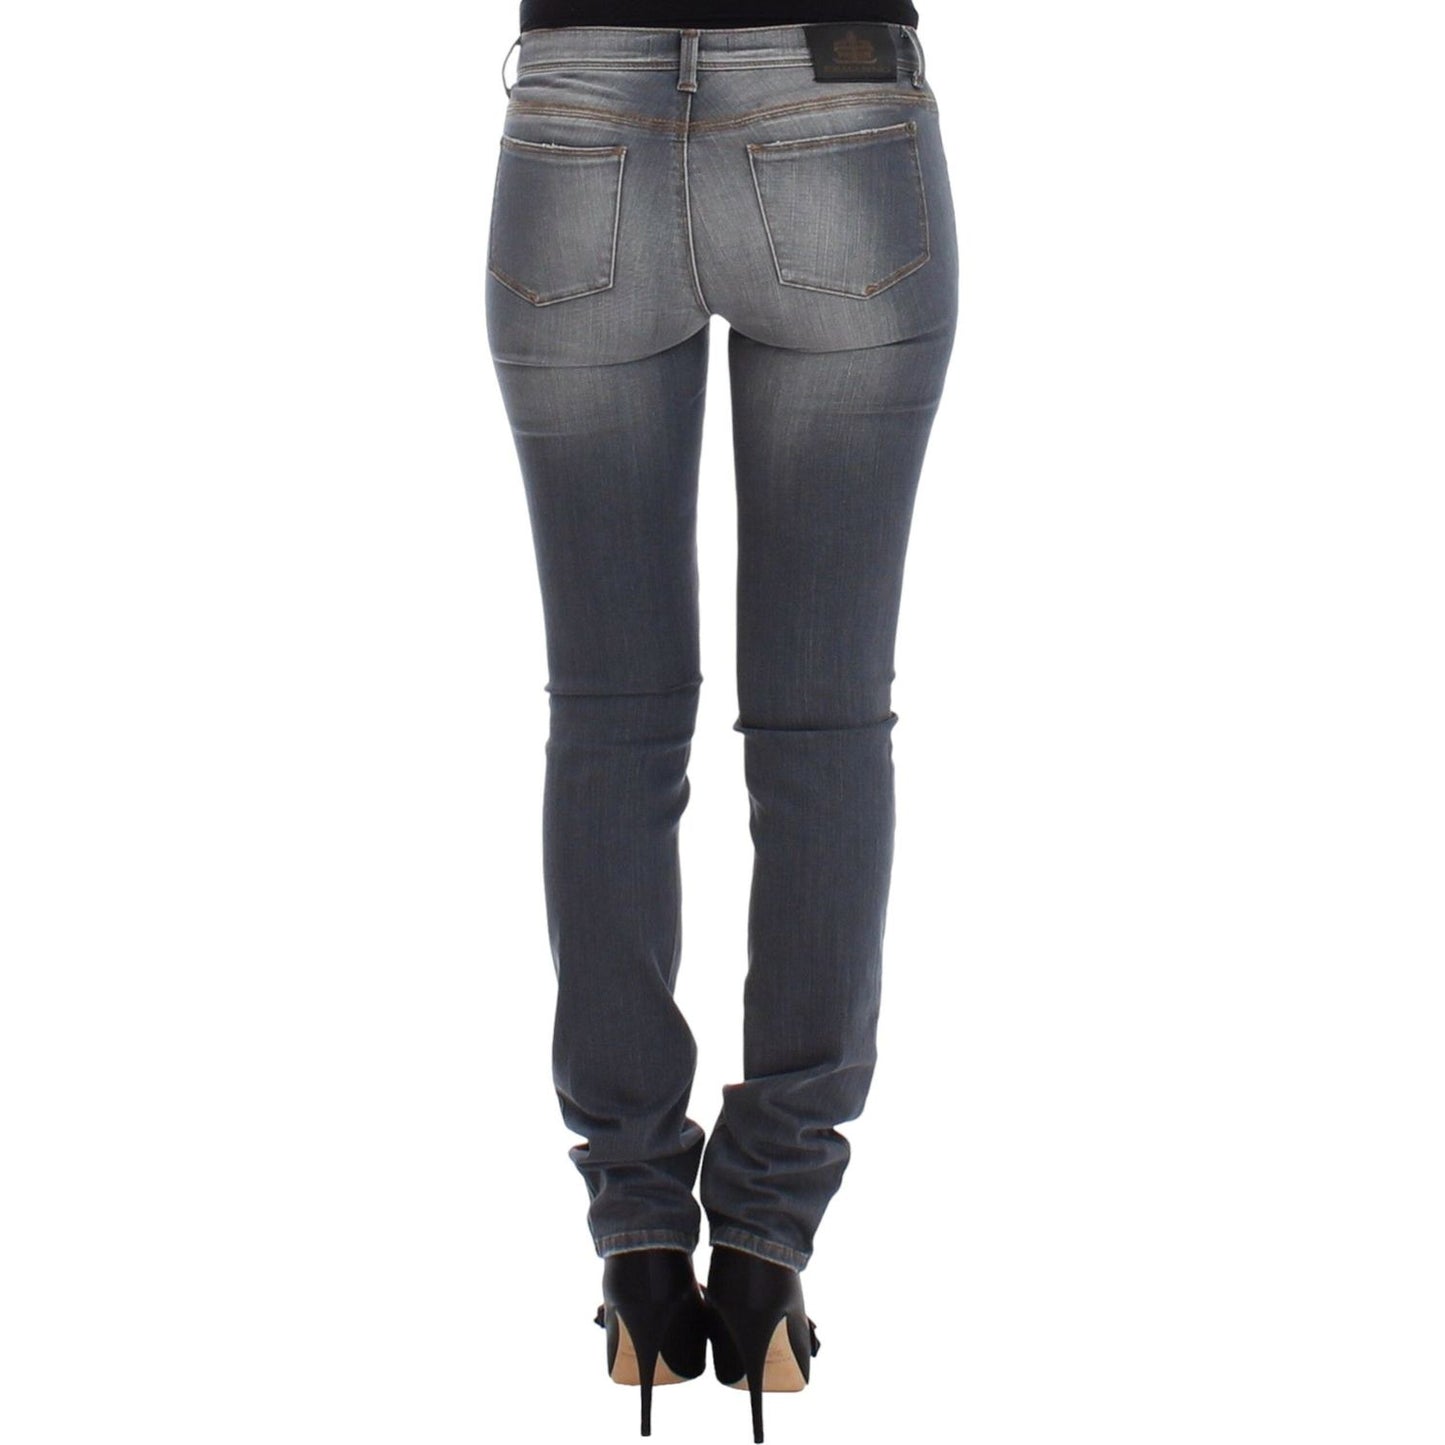 Ermanno Scervino Chic Gray Slim-Fit Skinny Jeans gray-slim-jeans-denim-pants-skinny-leg-stretch